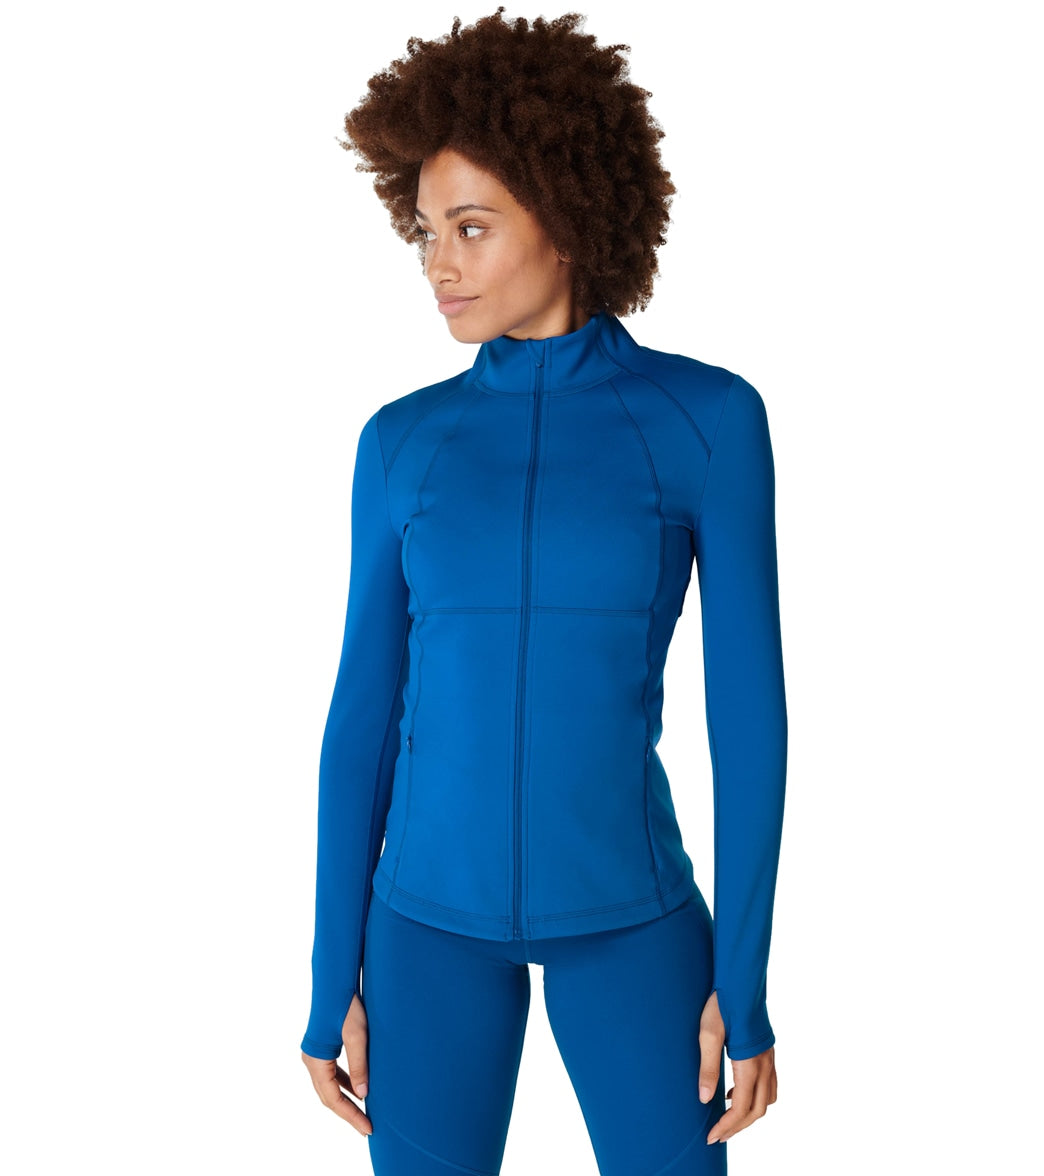 ALO Yoga Mens Coolfit Full Zip Blue Jacket Activewear Sports Long Sleeve XL